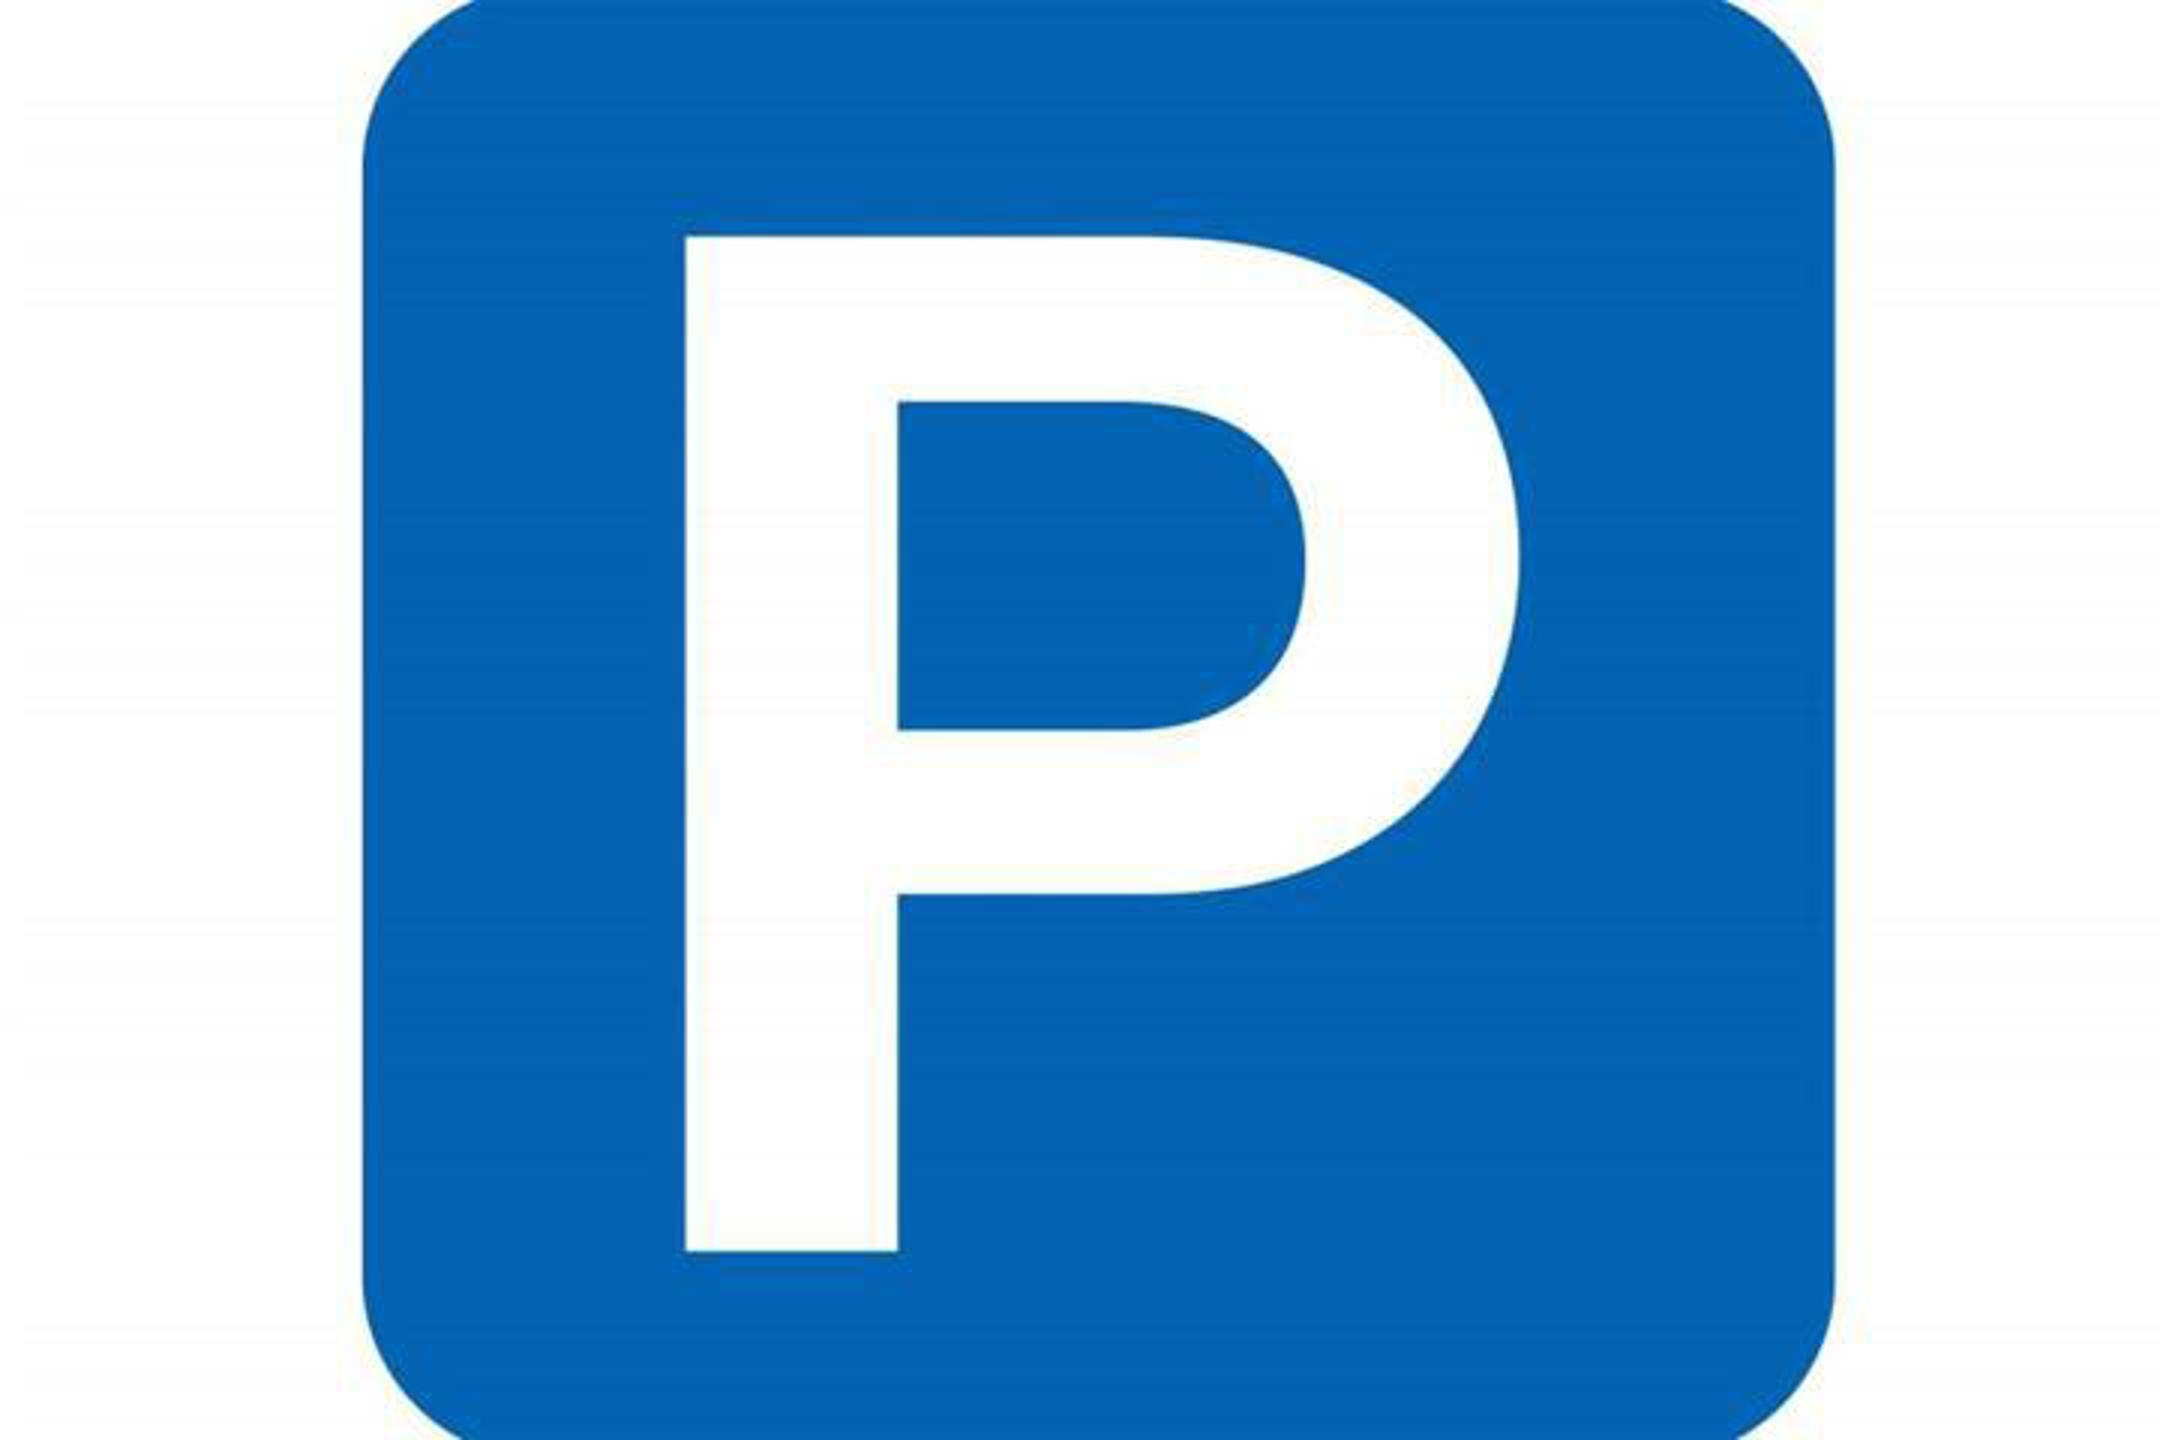 Parking te  huur in Sint-Pieters-Woluwe 1150 110.00€  slaapkamers 12.25m² - Zoekertje 1384713